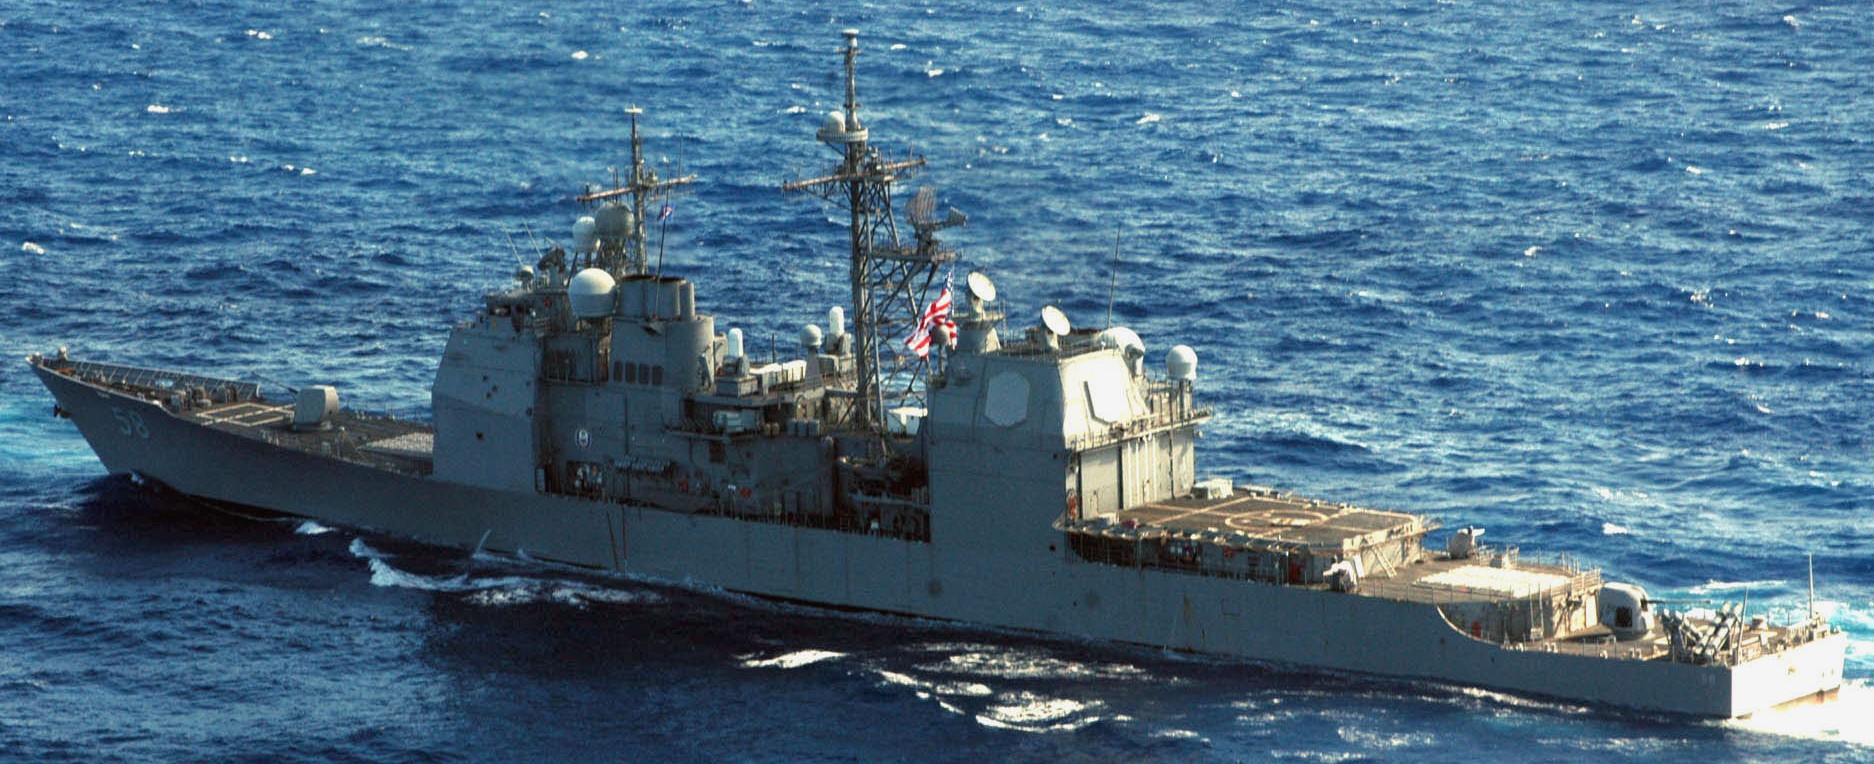 cg-58 uss philippine sea ticonderoga class guided missile cruiser aegis us navy 23